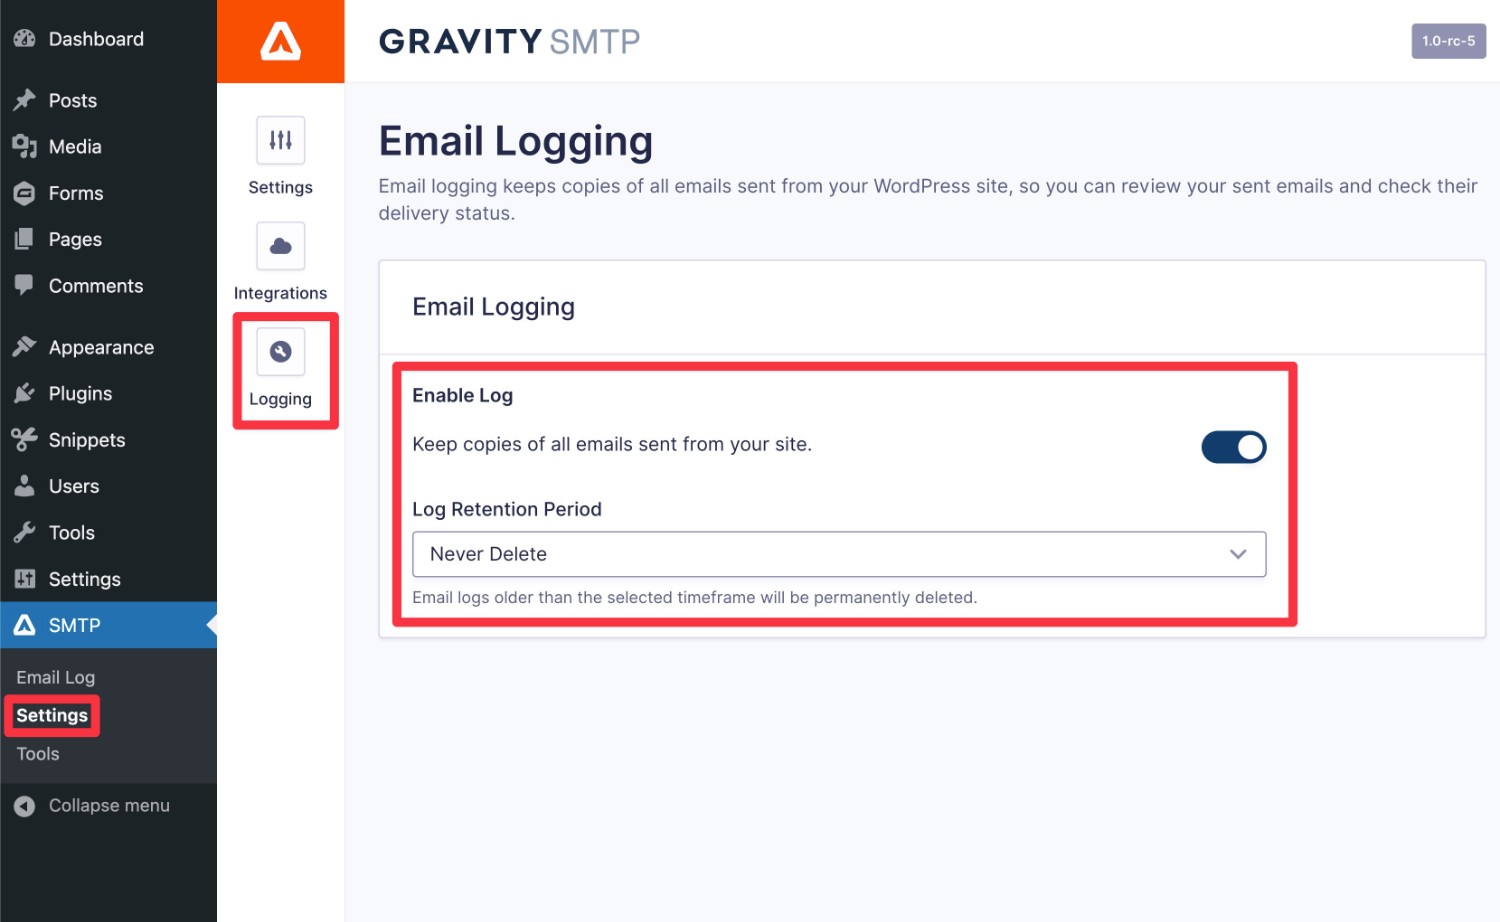 Configure Gravity SMTP email logging